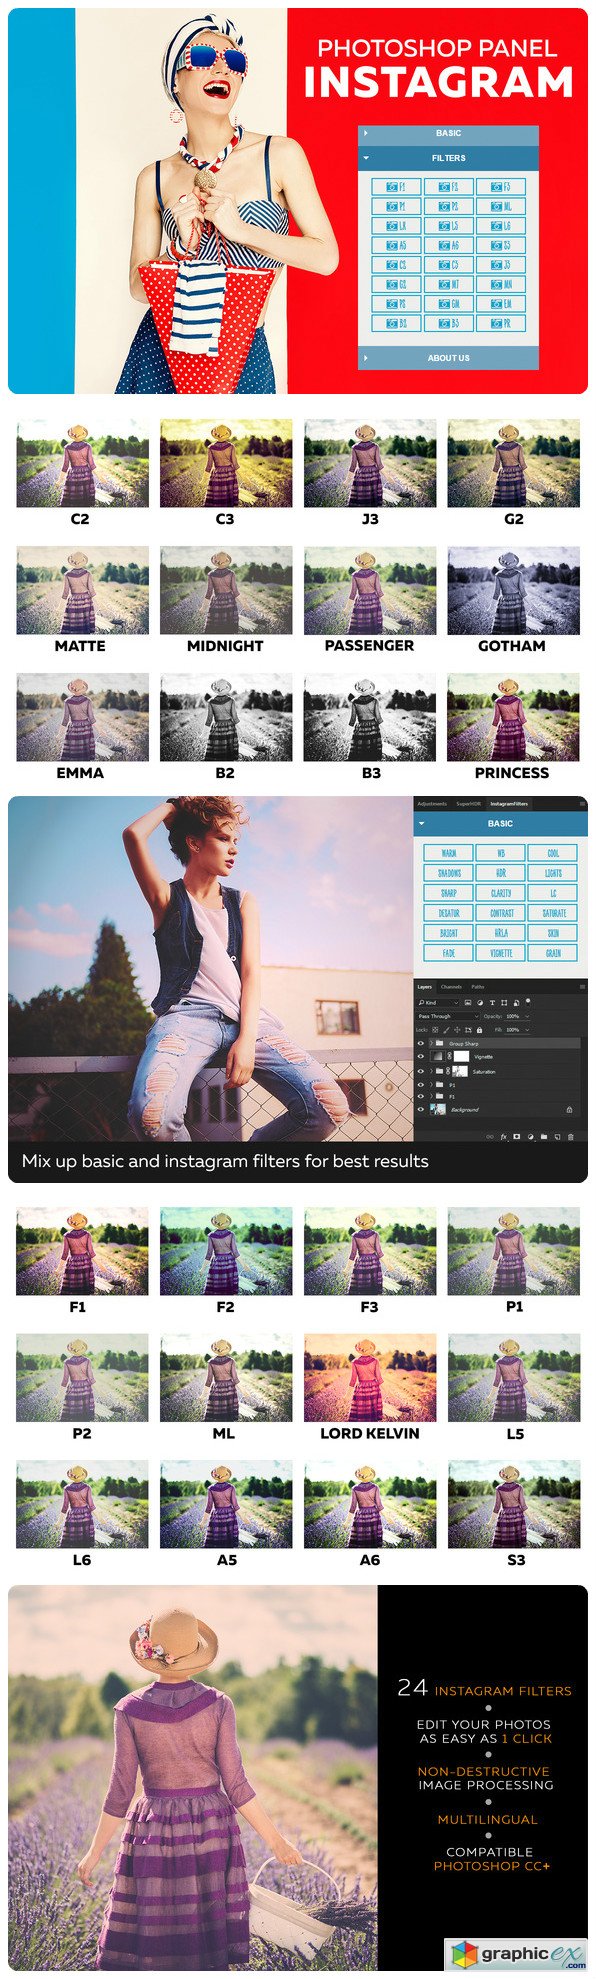 Instagram Filters Photoshop Panel